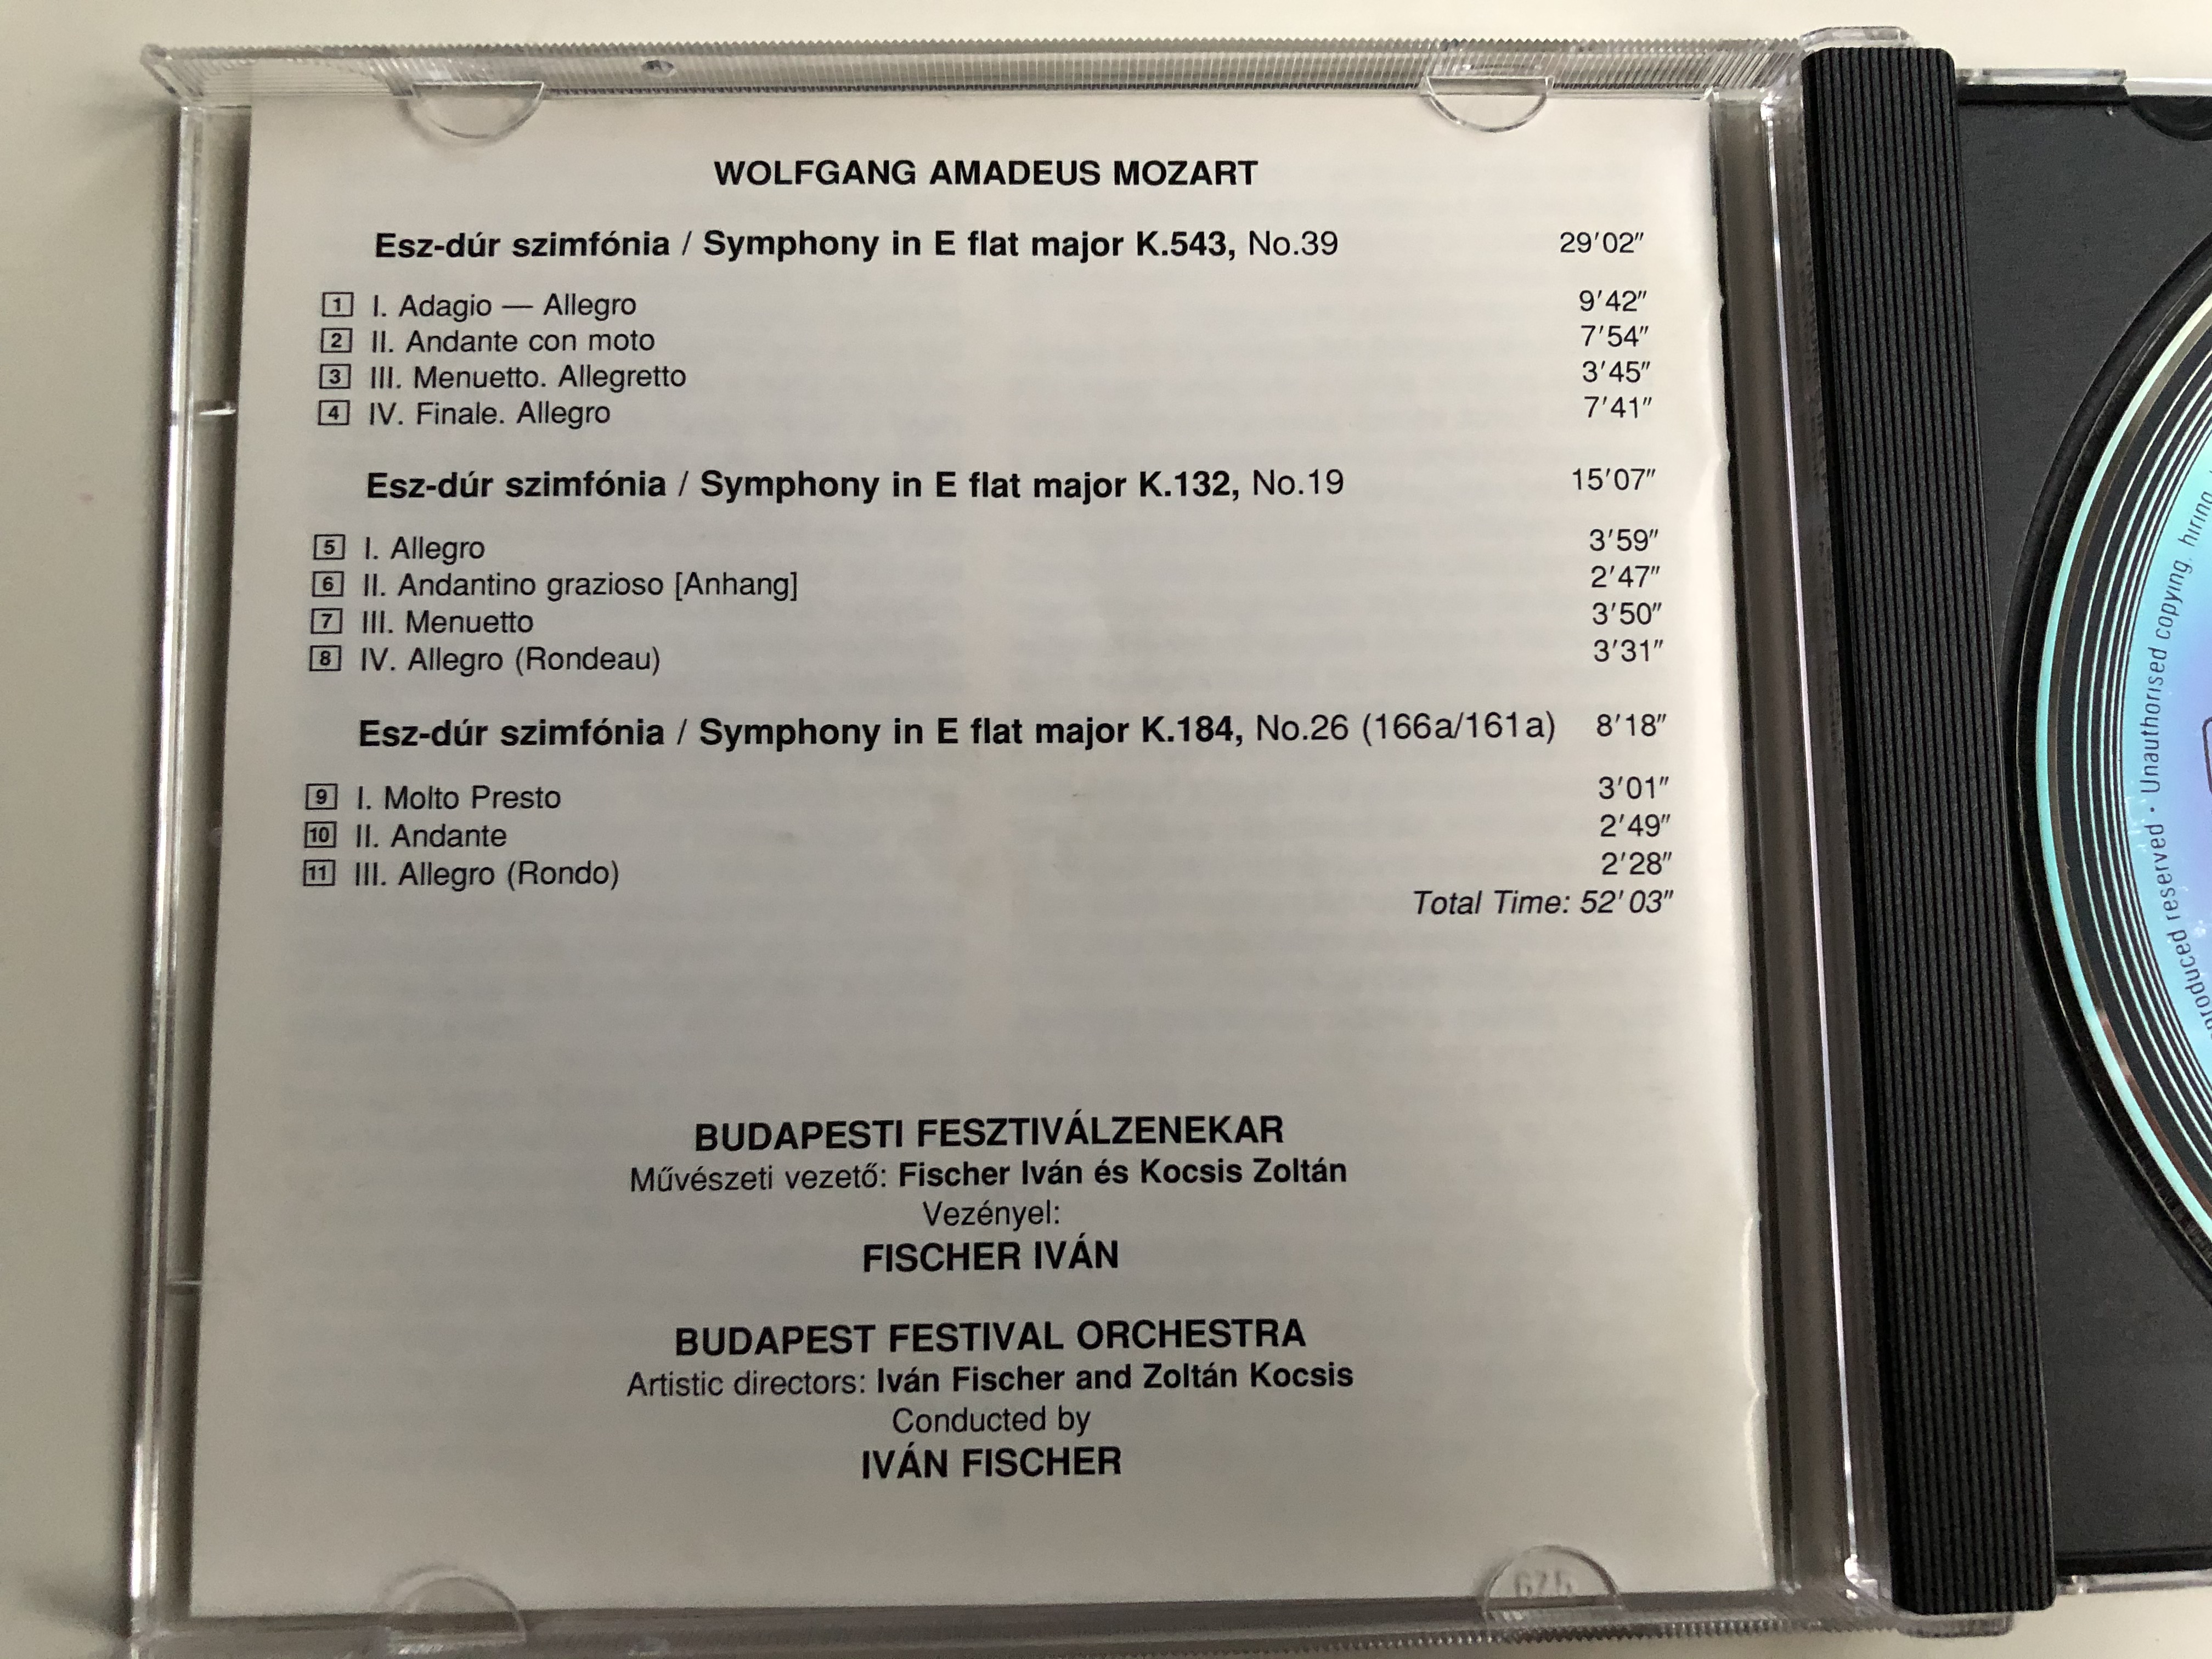 mozart-symphonies-in-e-flat-major-k543.132.184-budapest-festival-orchestra-ivan-fischer-hungaroton-audio-cd-1991-stereo-hcd-31093-6-.jpg